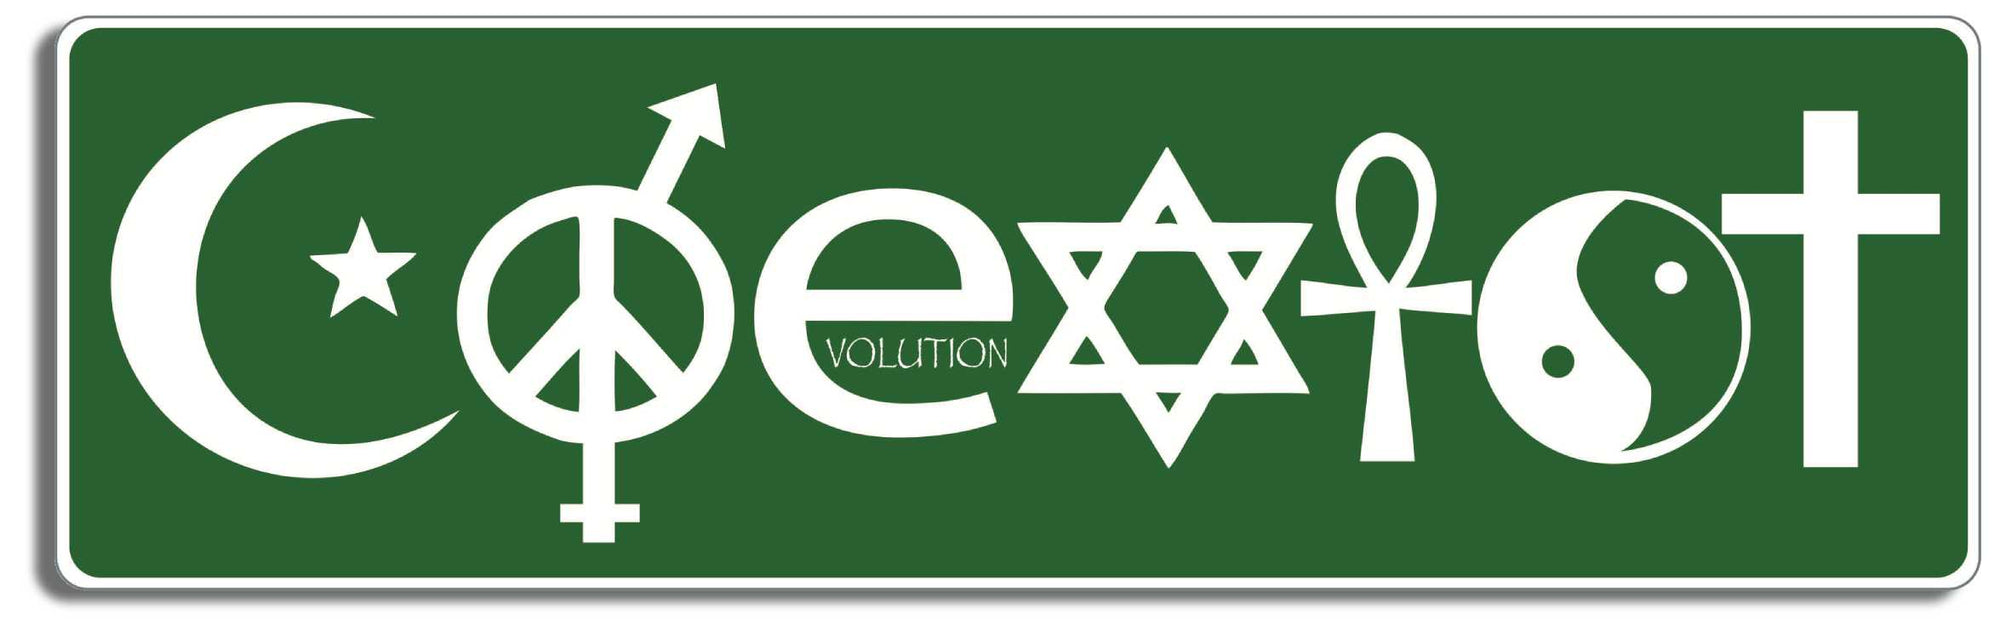 Coexist Green - 3" x 10" -  Decal Bumper Sticker-peace Bumper Sticker Car Magnet Coexist Green-  Decal for carsliberal, peace, political